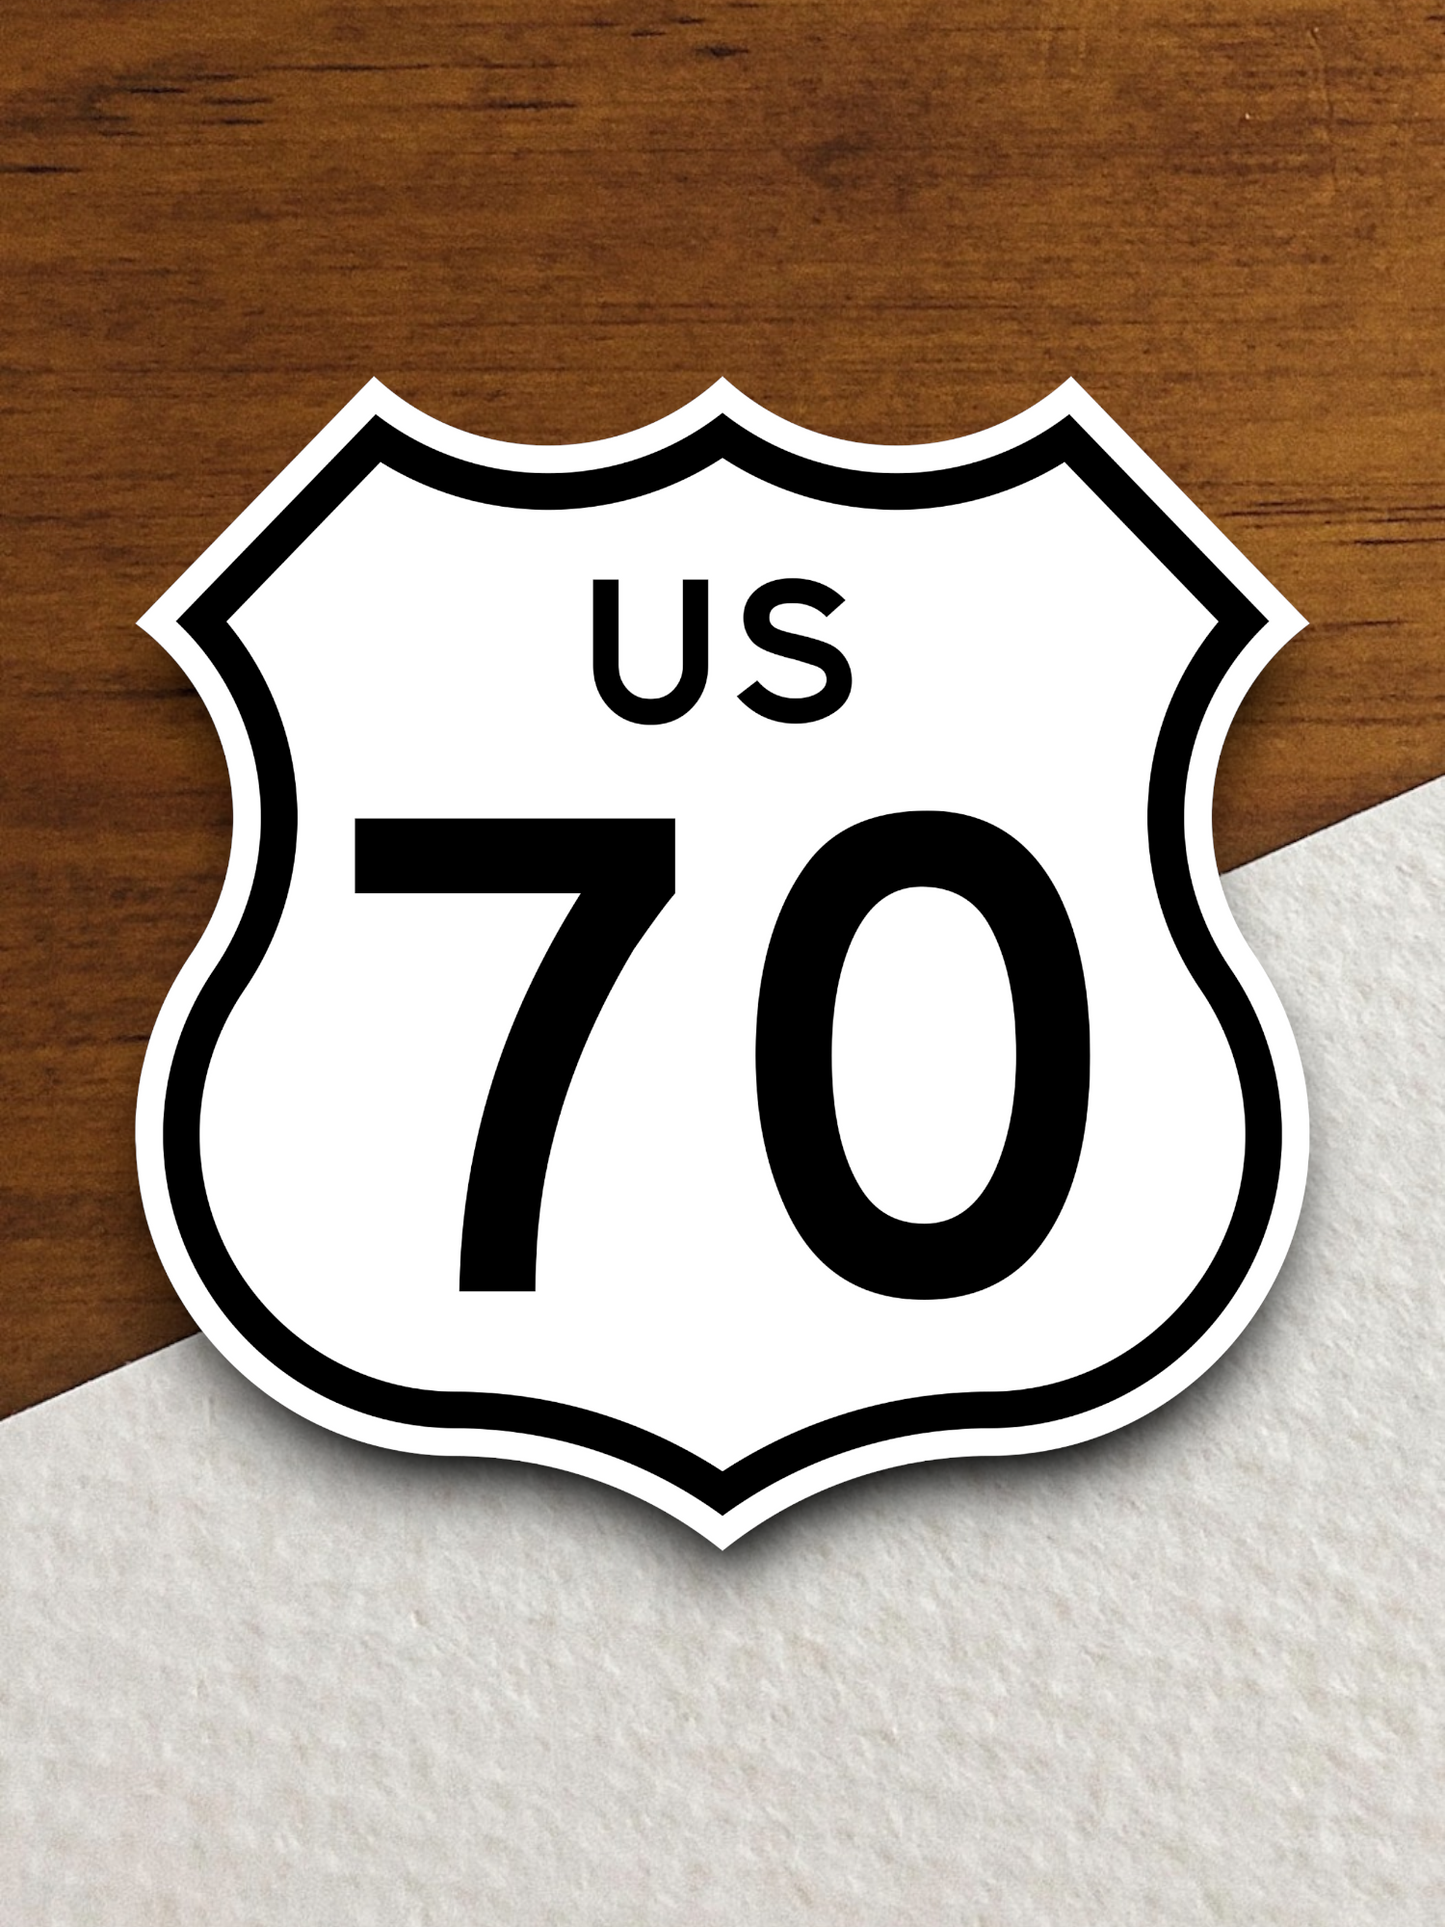 U.S. Route 70 Road Sign Sticker